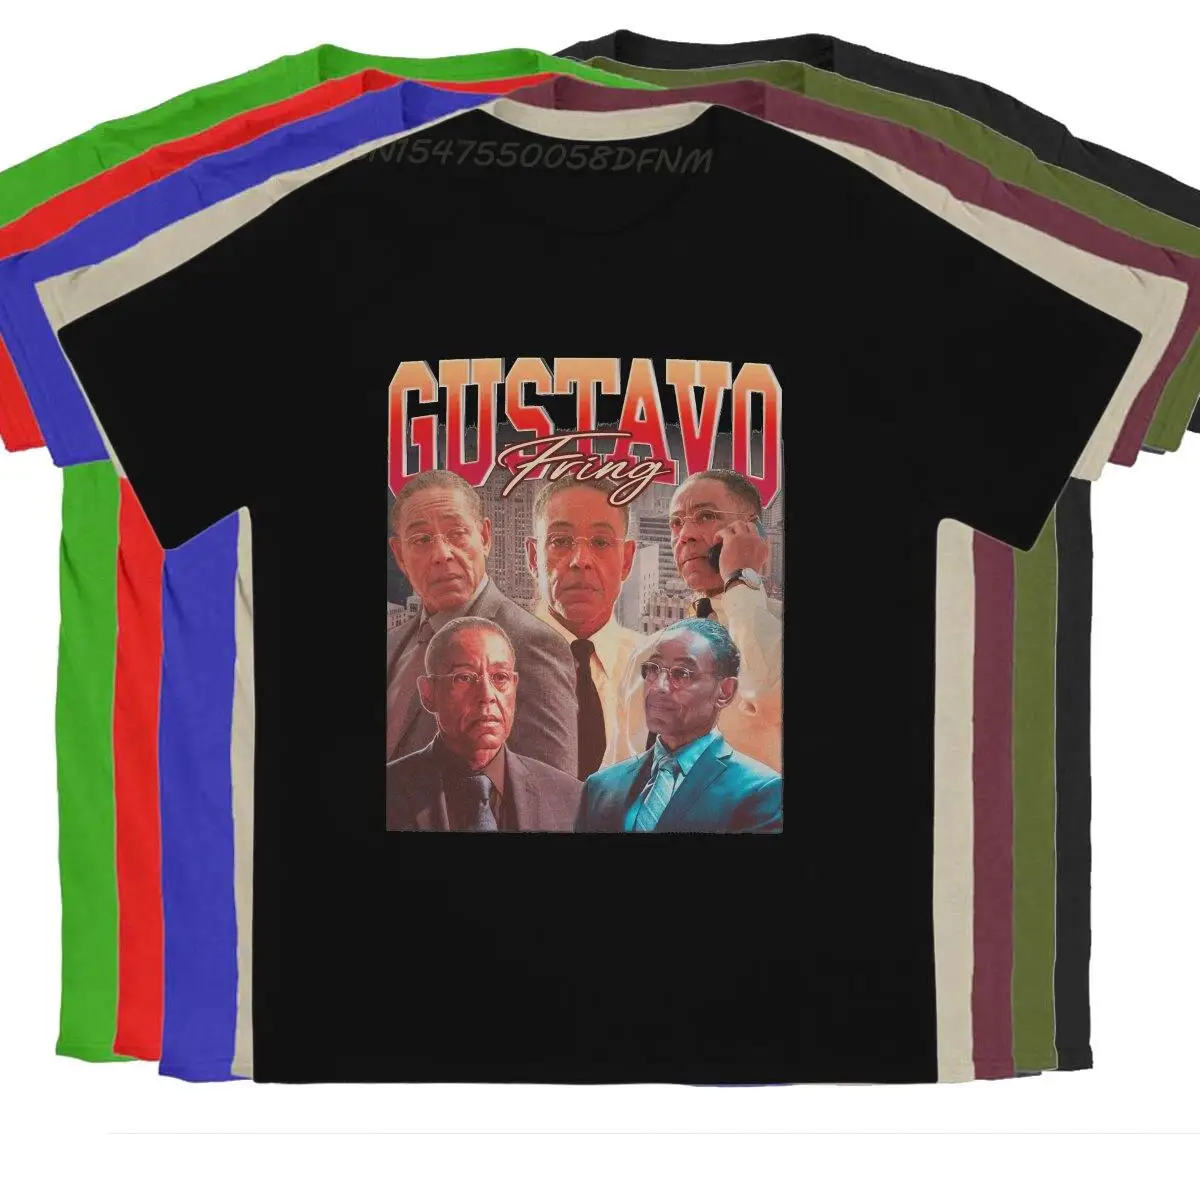 

GUSTAVO FRING Vintage 90s Rap Style T-shirts Men's Pure Cotton Harajuku T-Shirt Camisas Heisenberg Breaking Bad Tee Shirt